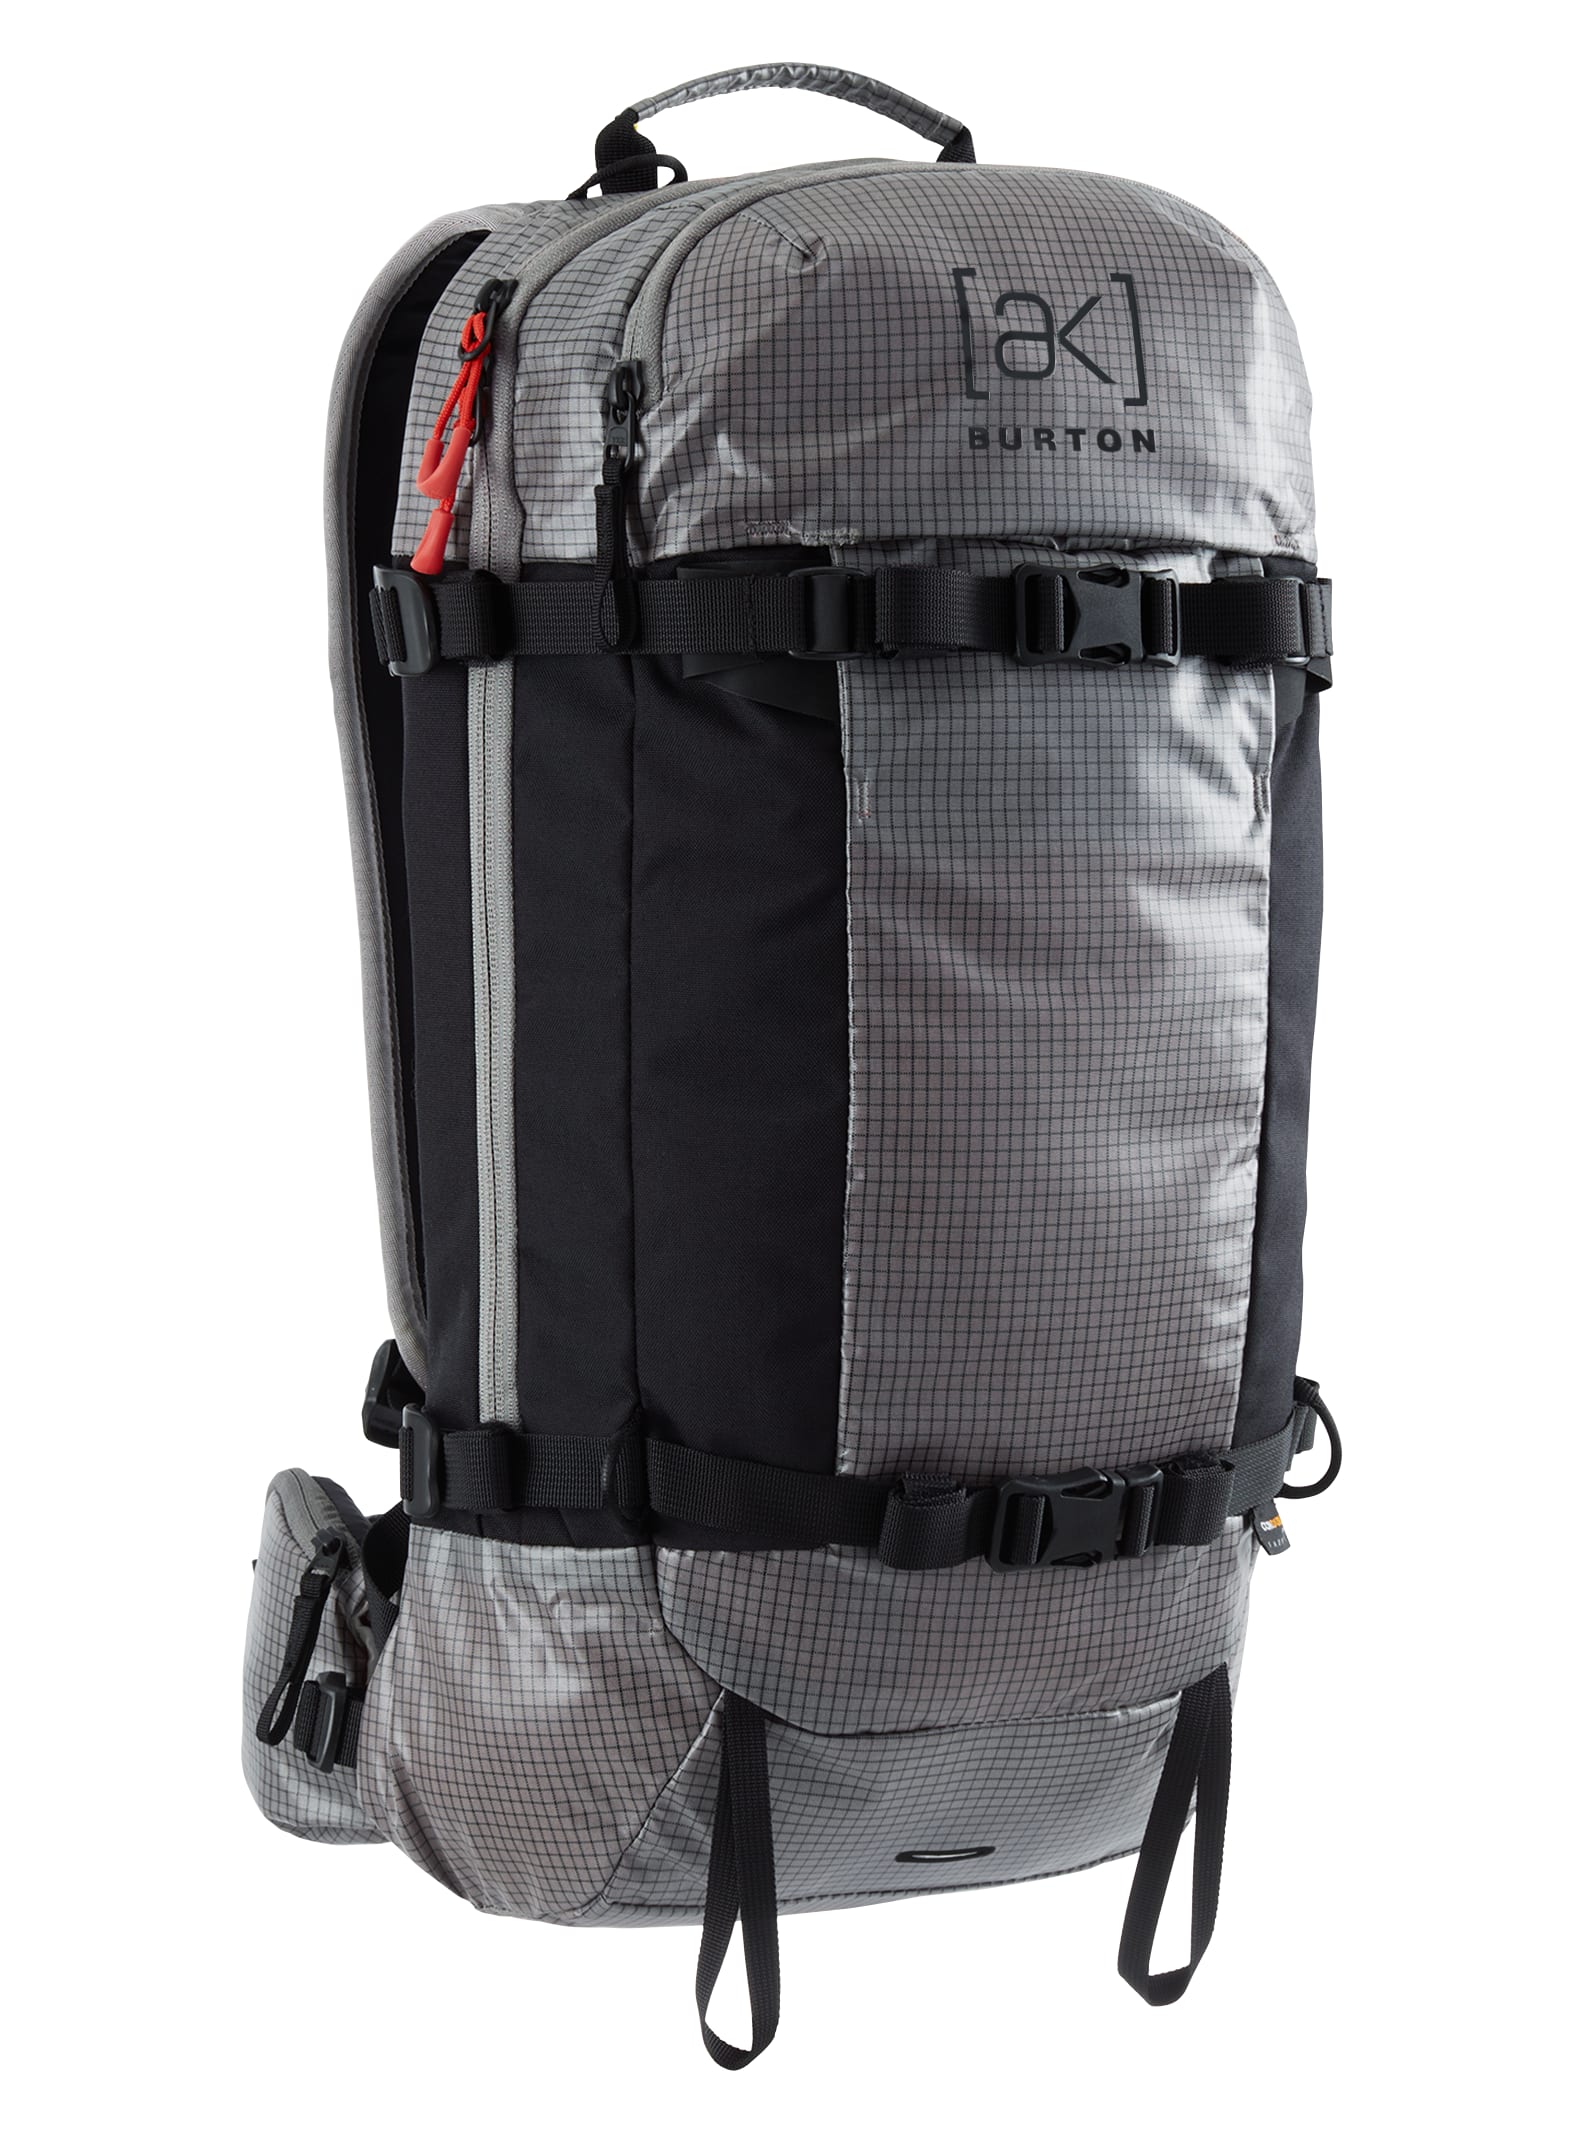 ak] Dispatcher 18L Backpack | Burton.com Winter 2023 CH